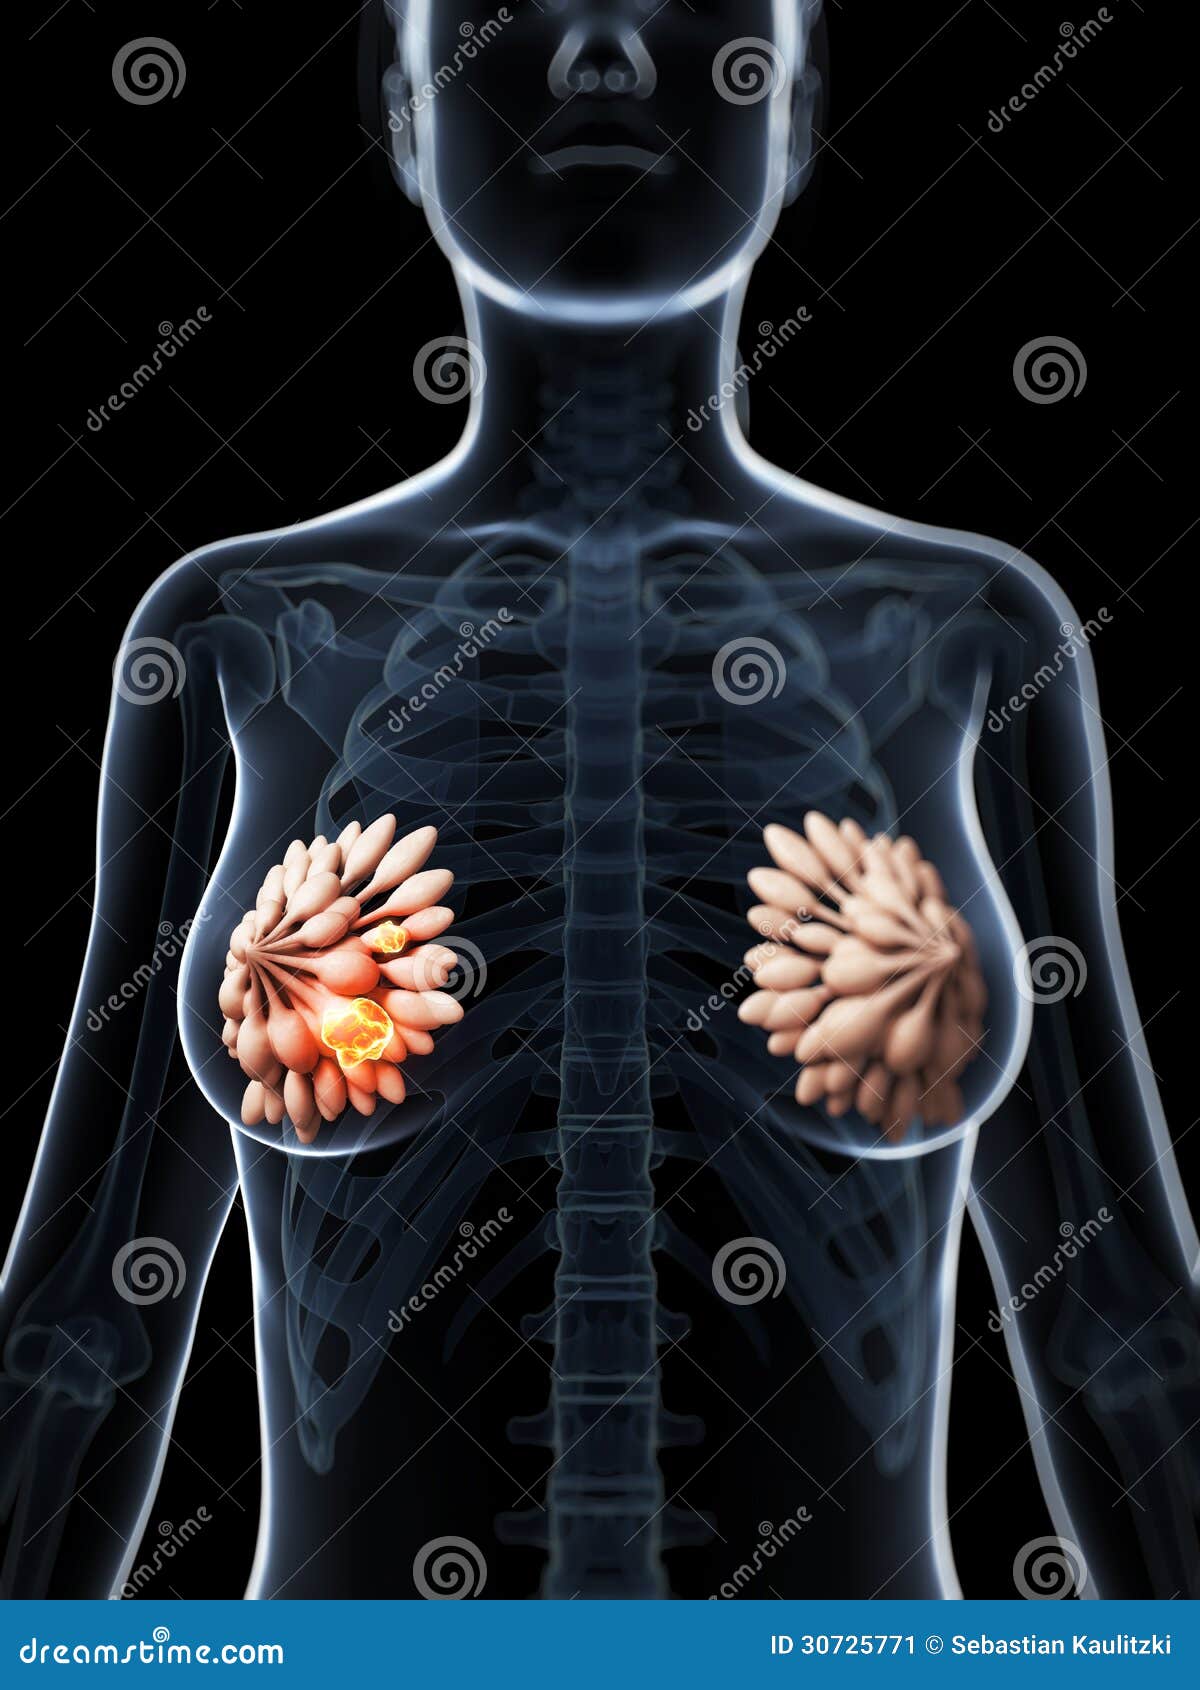 Female breast anatomy, illustration - Stock Image - F035/7299